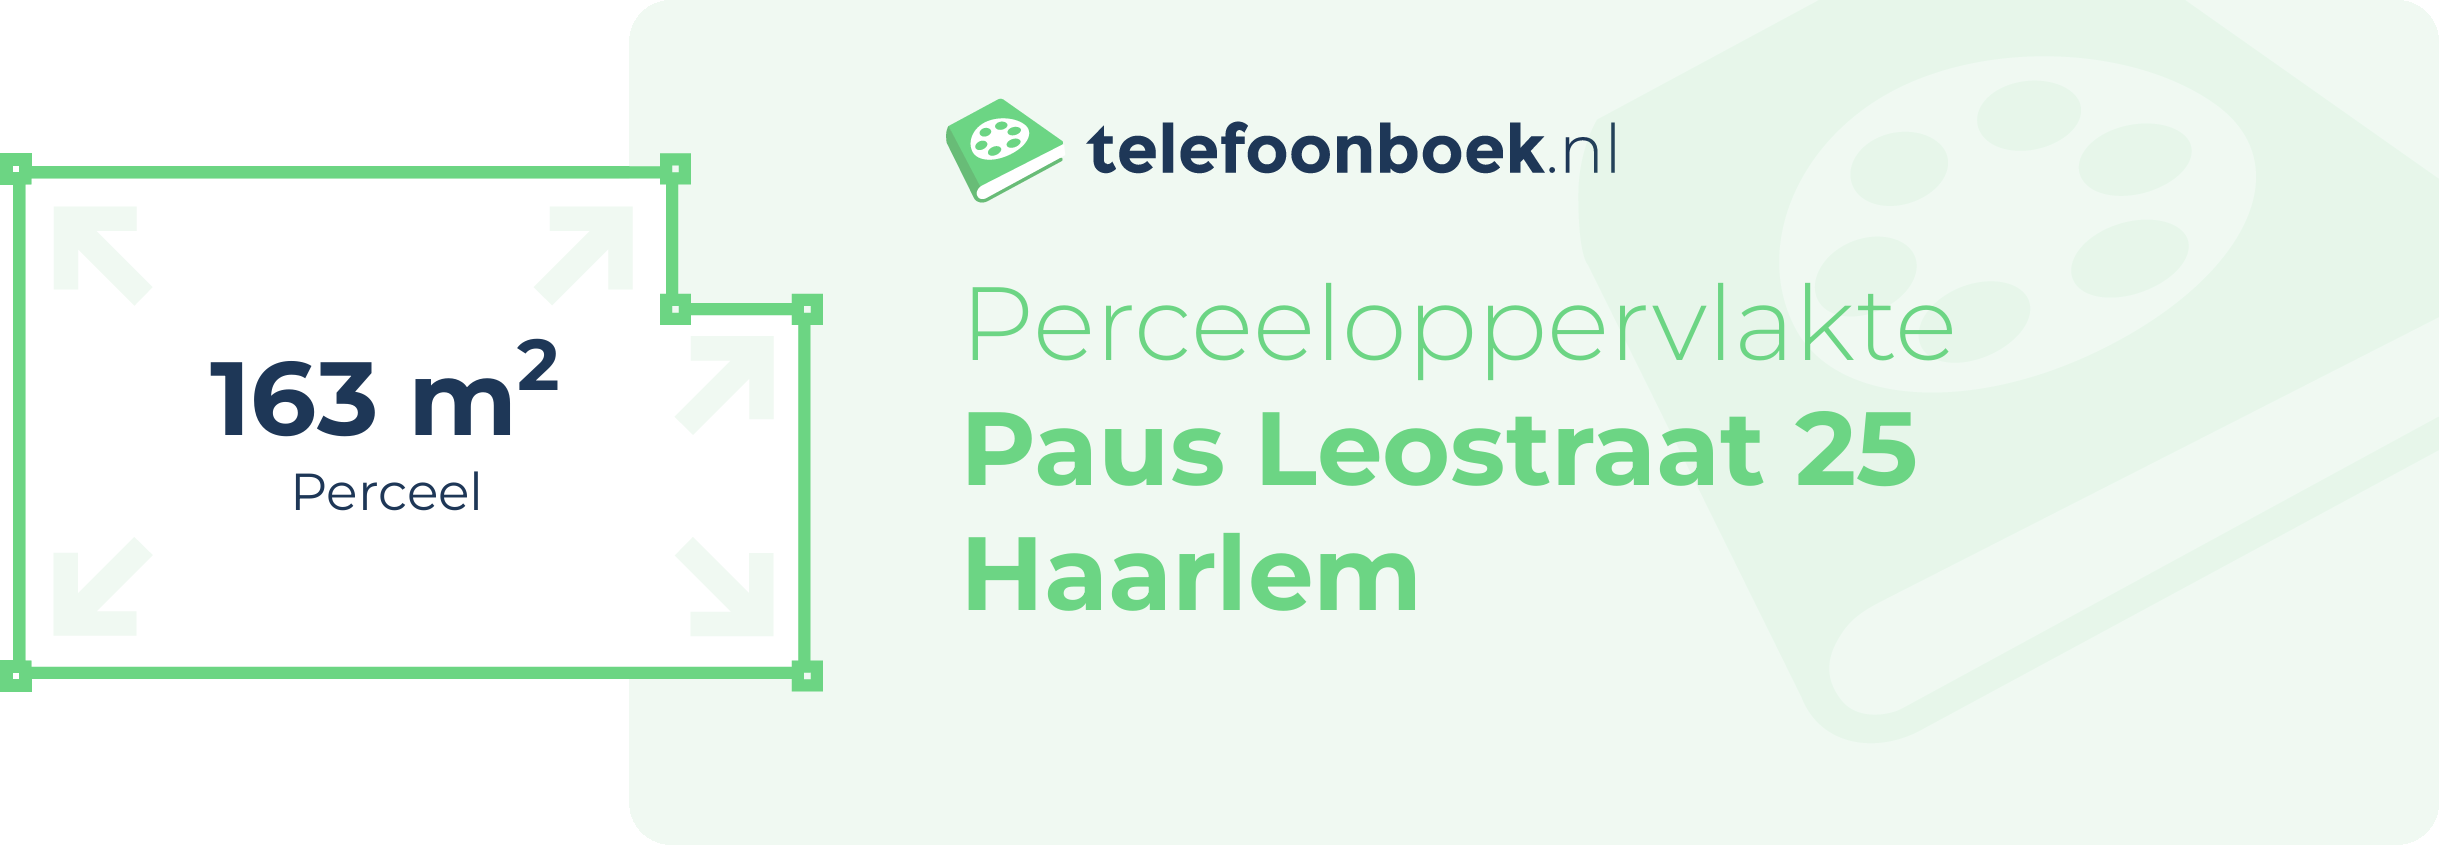 Perceeloppervlakte Paus Leostraat 25 Haarlem